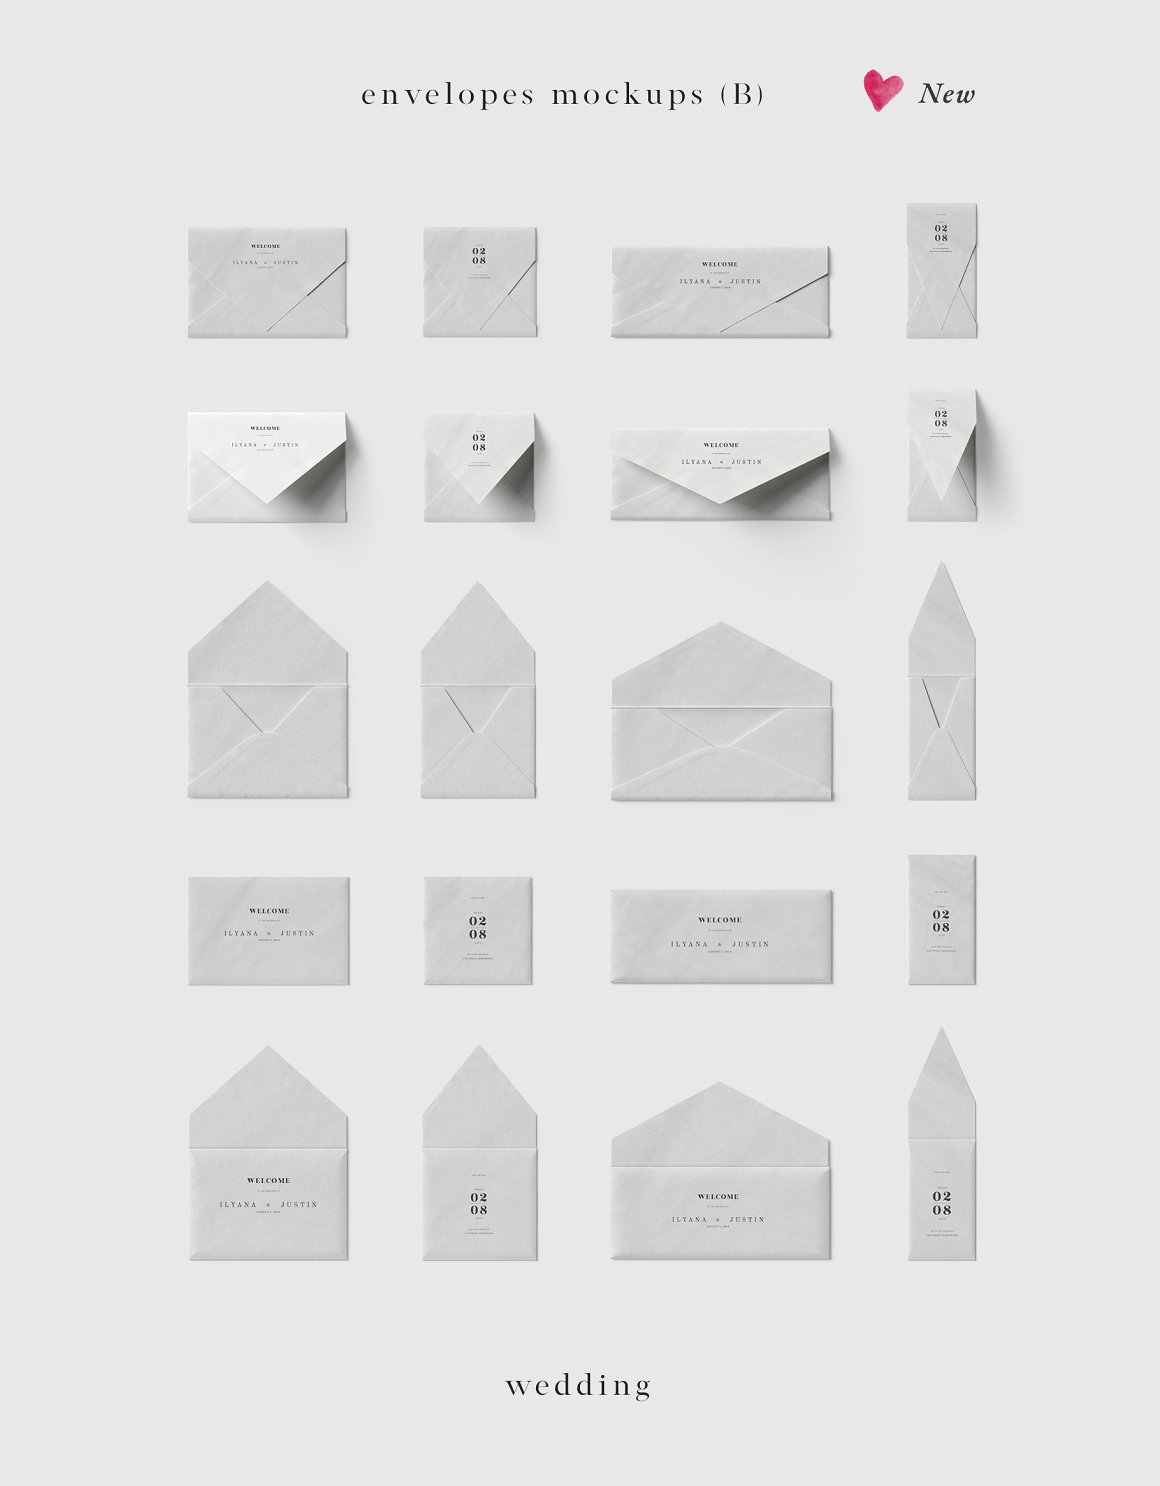 New Envelopes Mockups for Wedding (B).